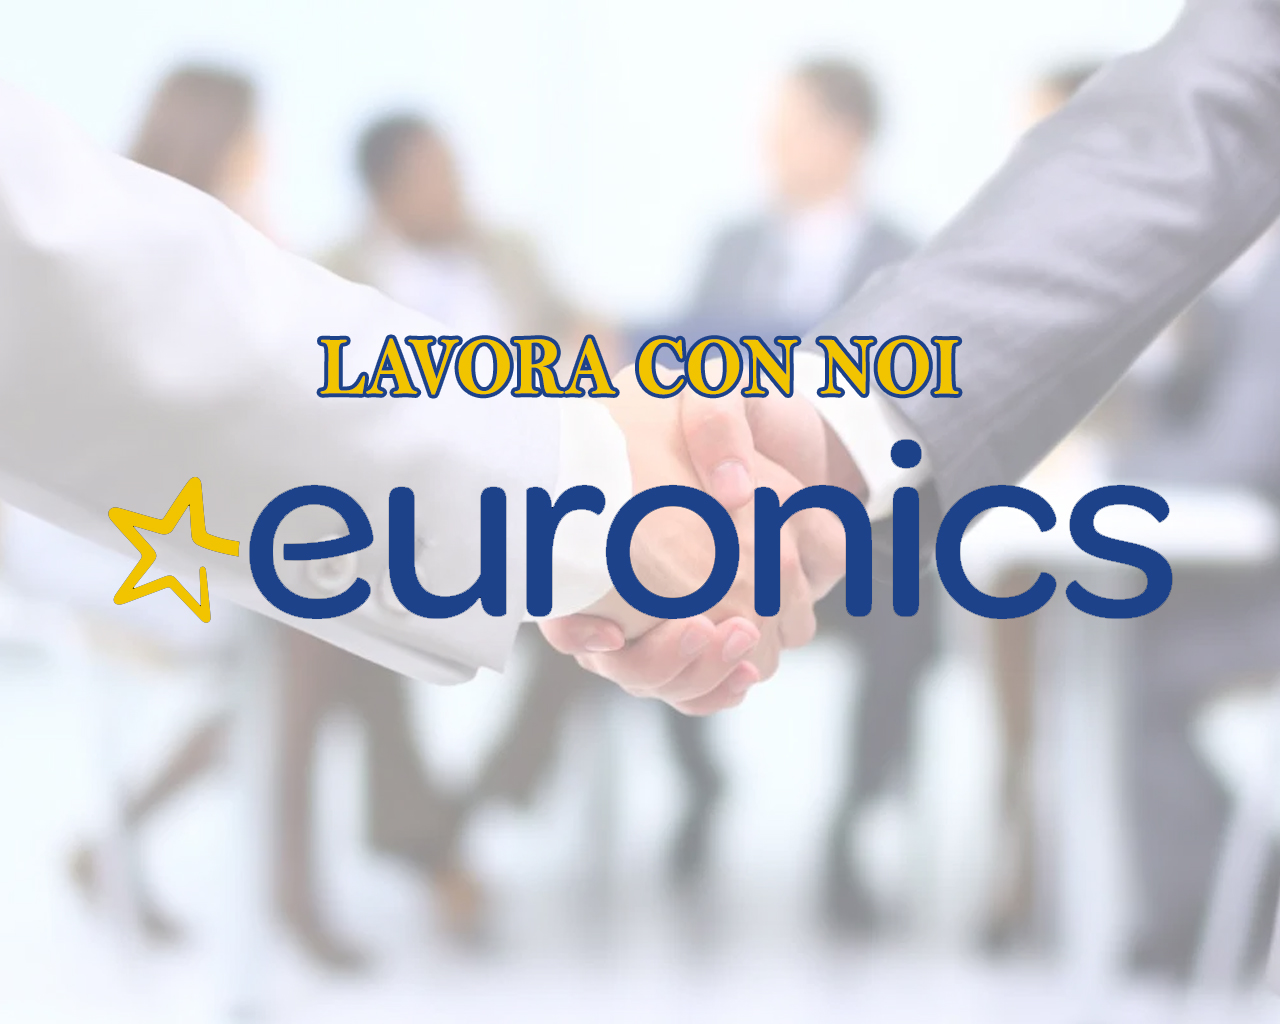 euronics_lavora con noi